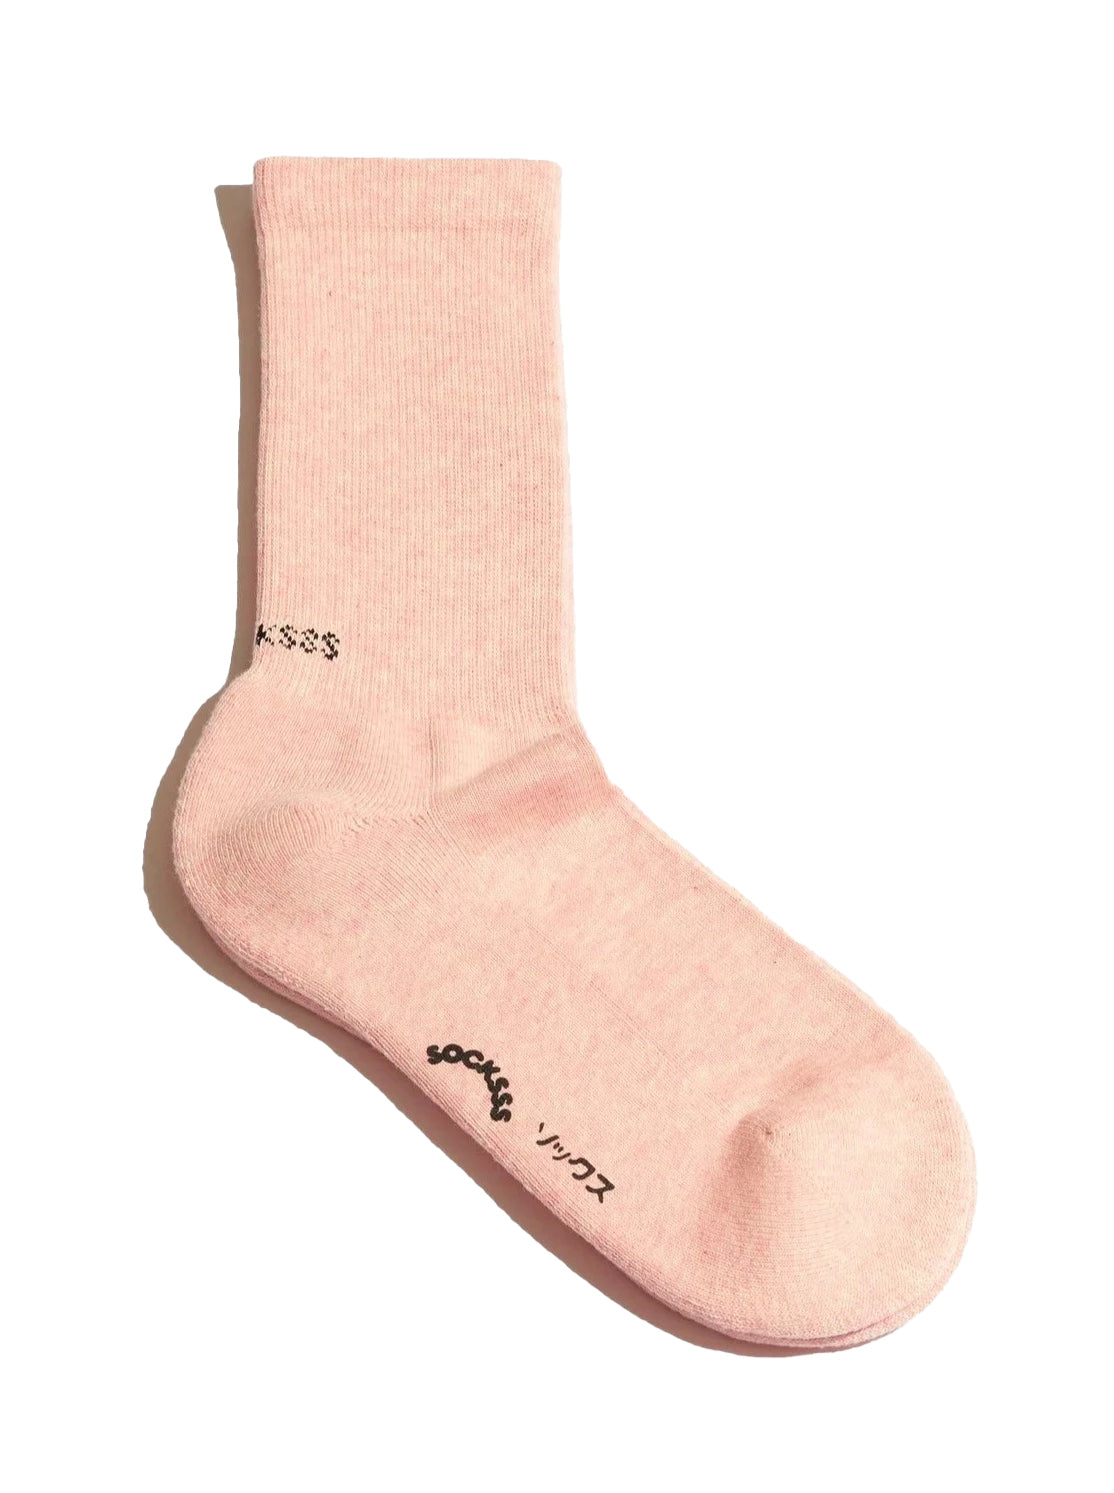 'Piggy Bank' socks